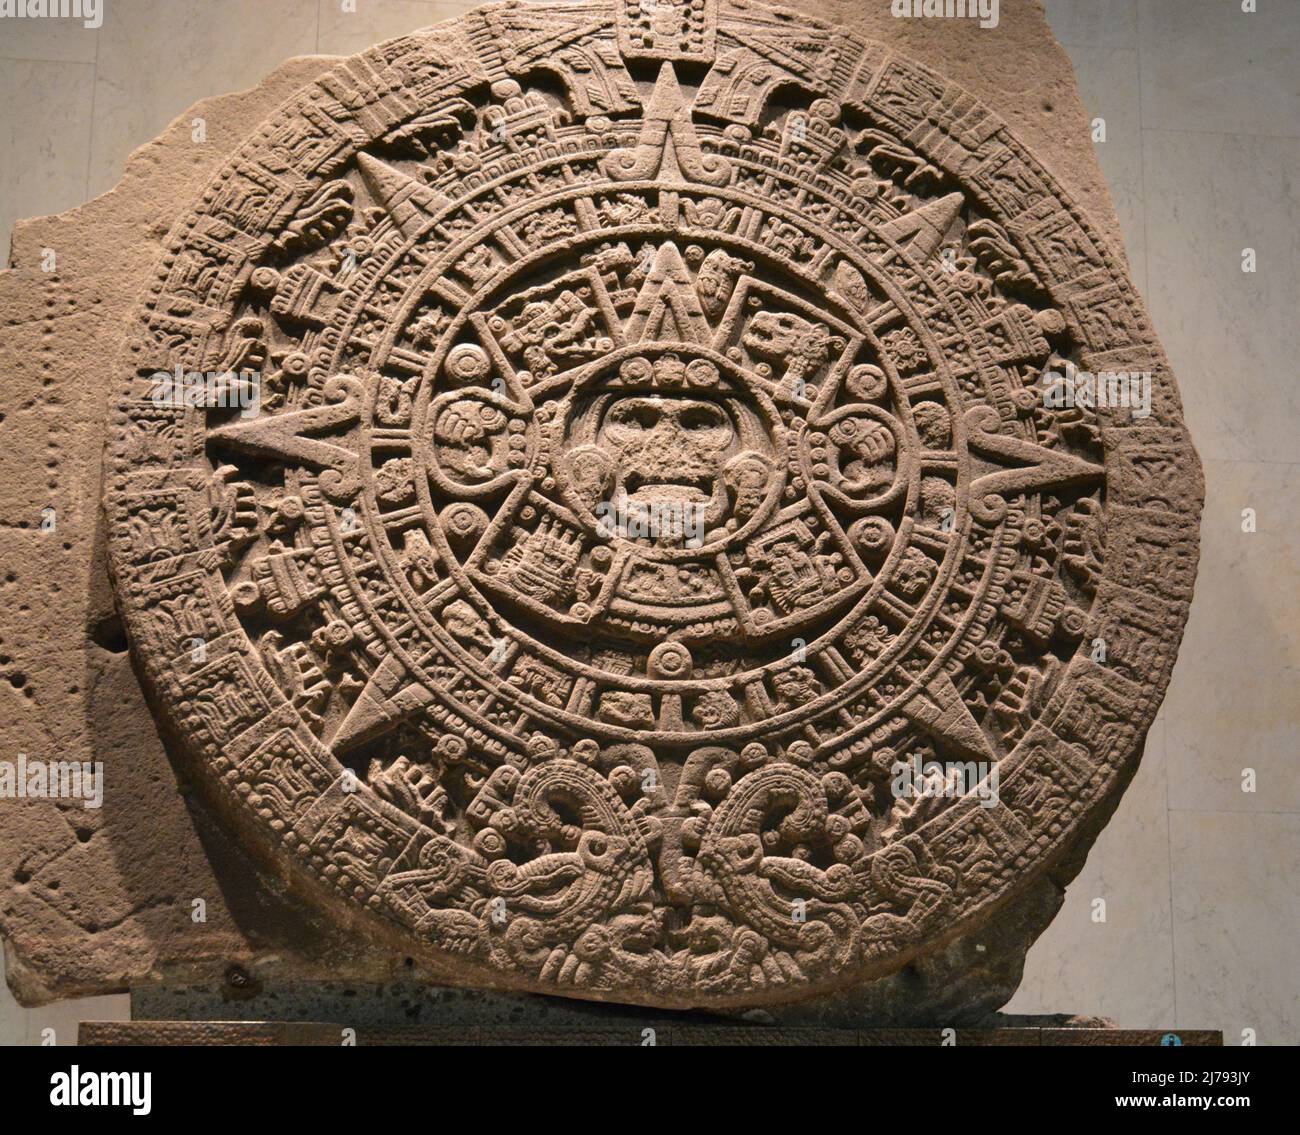 Aztec Calendar or La Piedra del Sol, National Museum of Anthropology Stock Photo